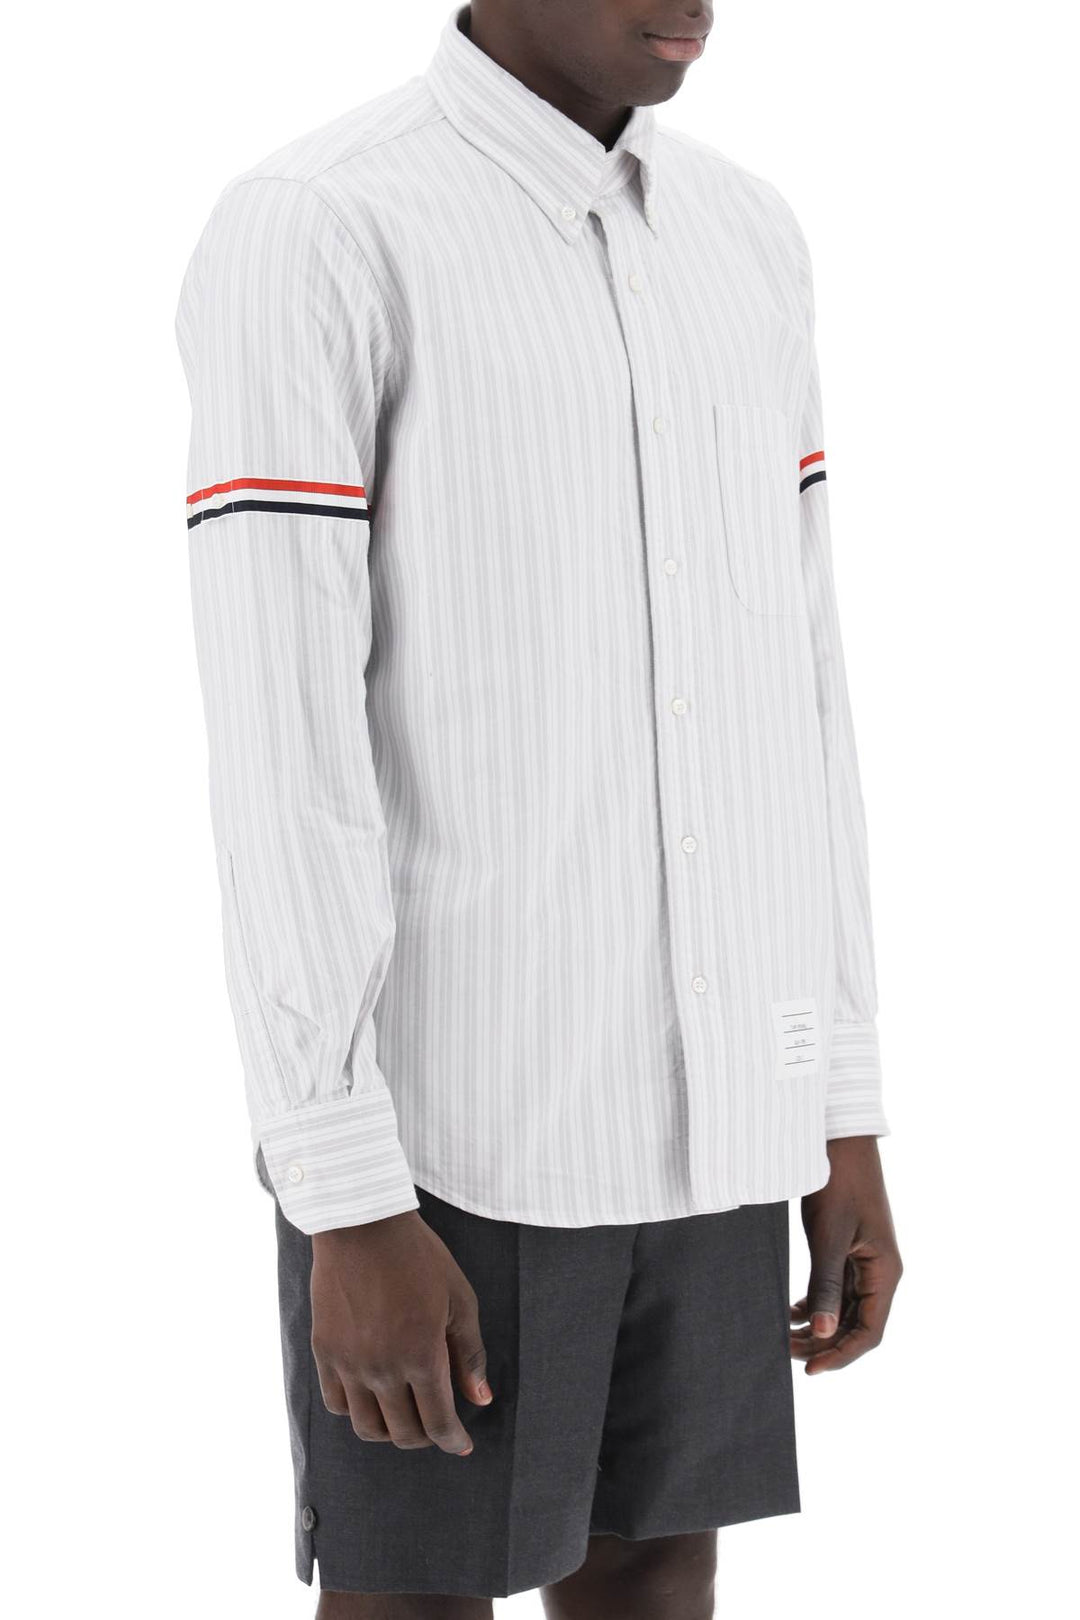 Thom Browne Striped Oxford Shirt   White